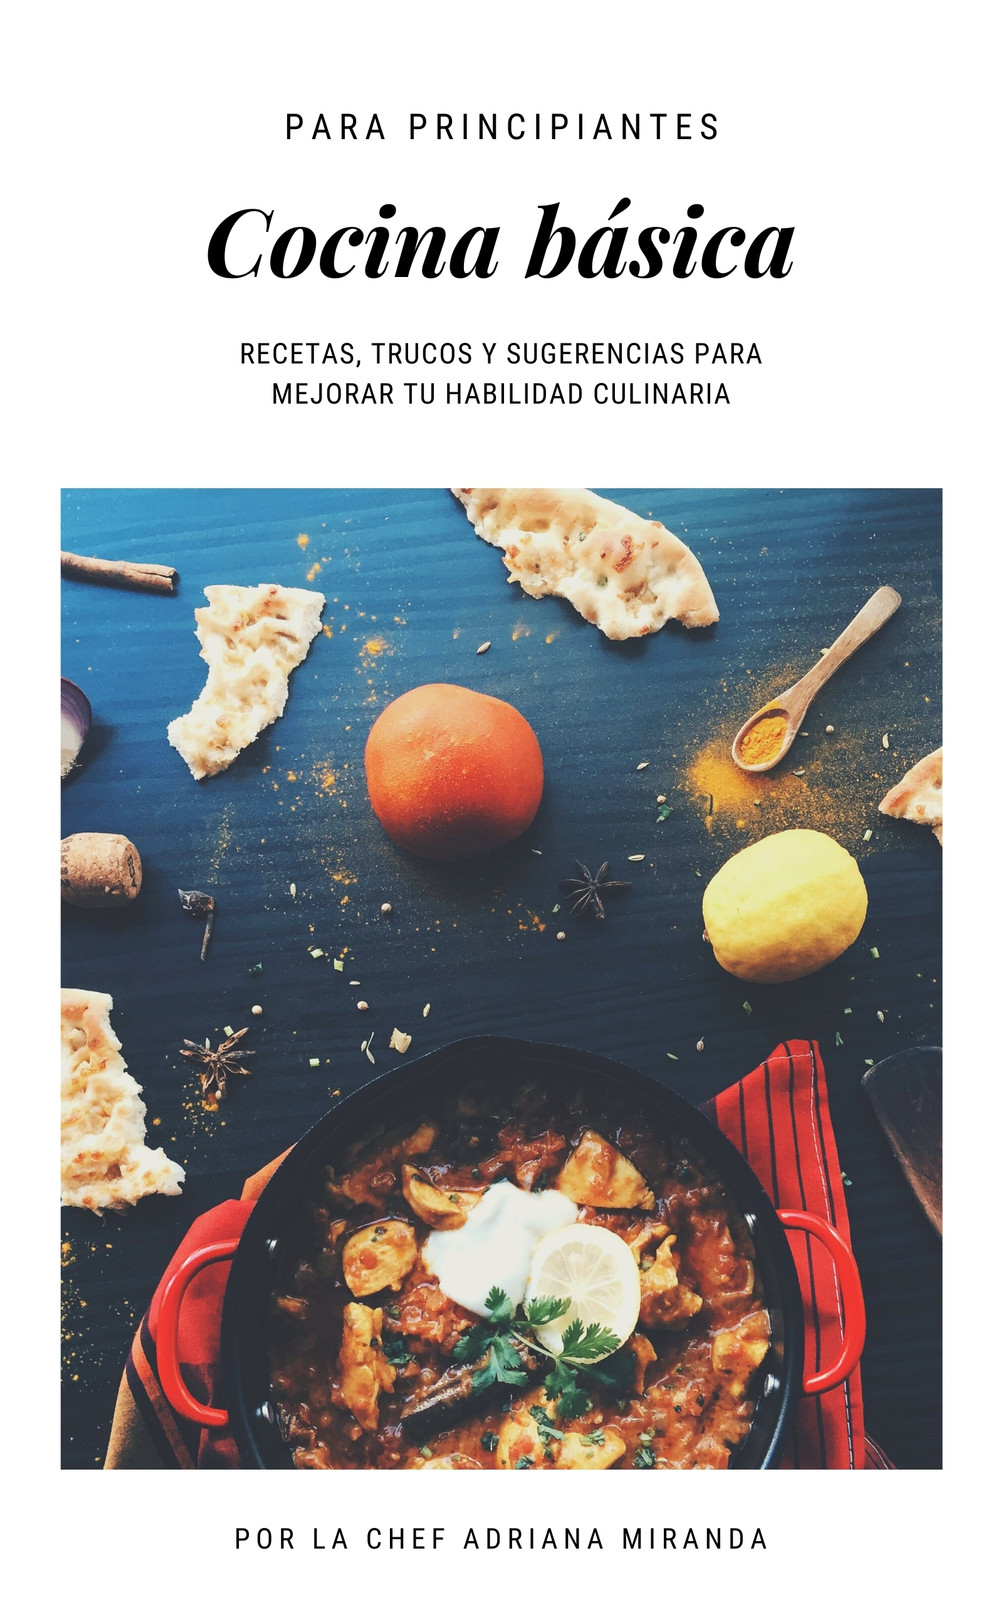 https://marketplace.canva.com/EAEzT6PZQOM/1/0/1003w/canva-blanco-minimalista-libro-de-cocina-portada-de-libro-de-cocina-sv1paKXhR20.jpg